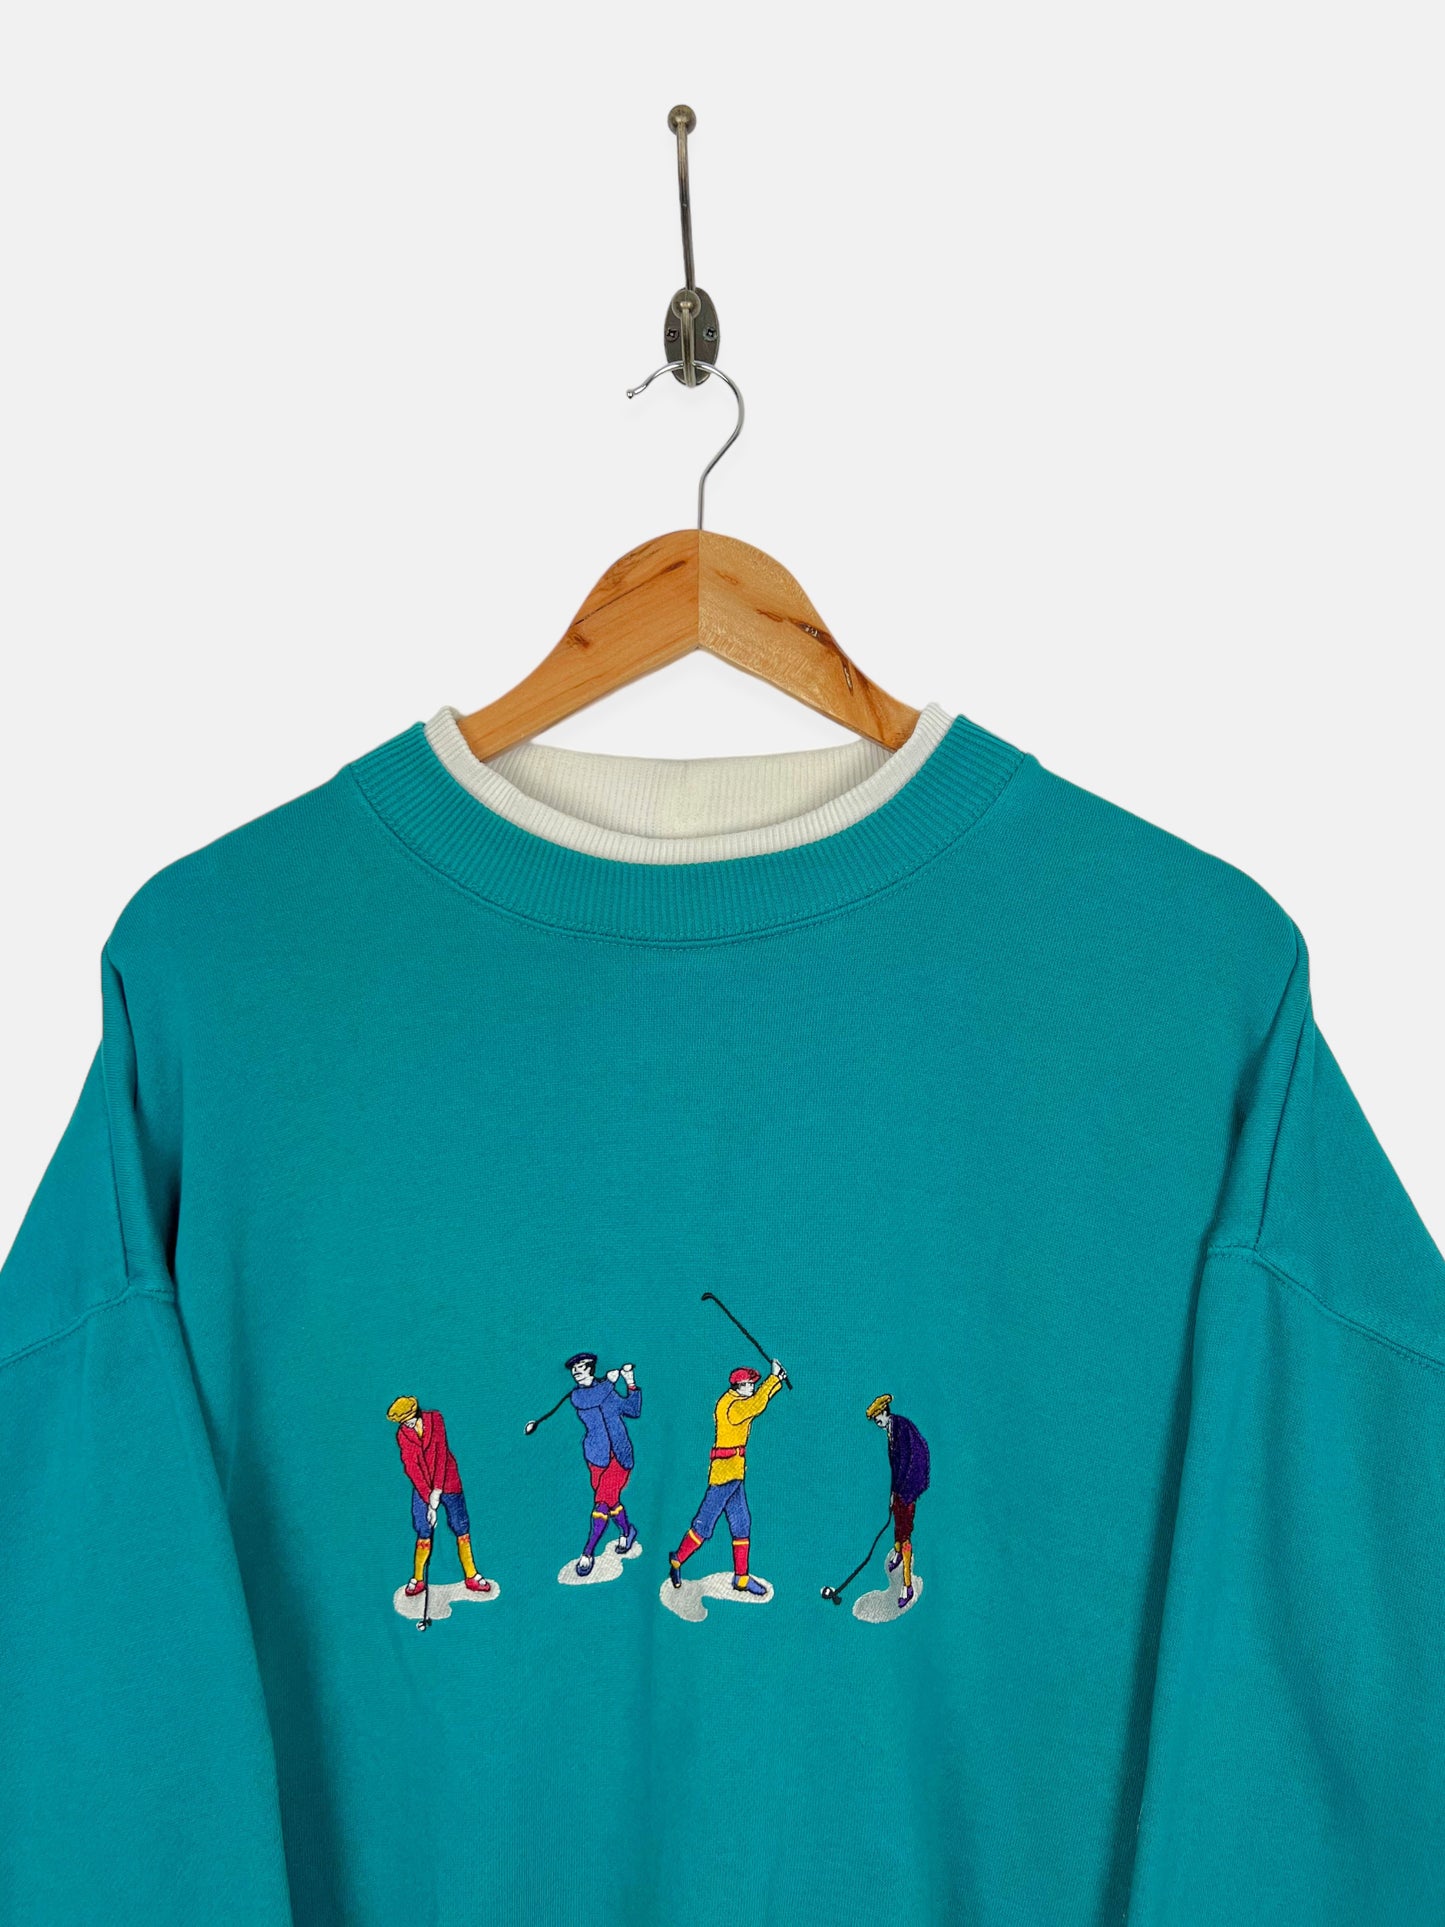 90's Golf Embroidered Vintage Sweatshirt Size M